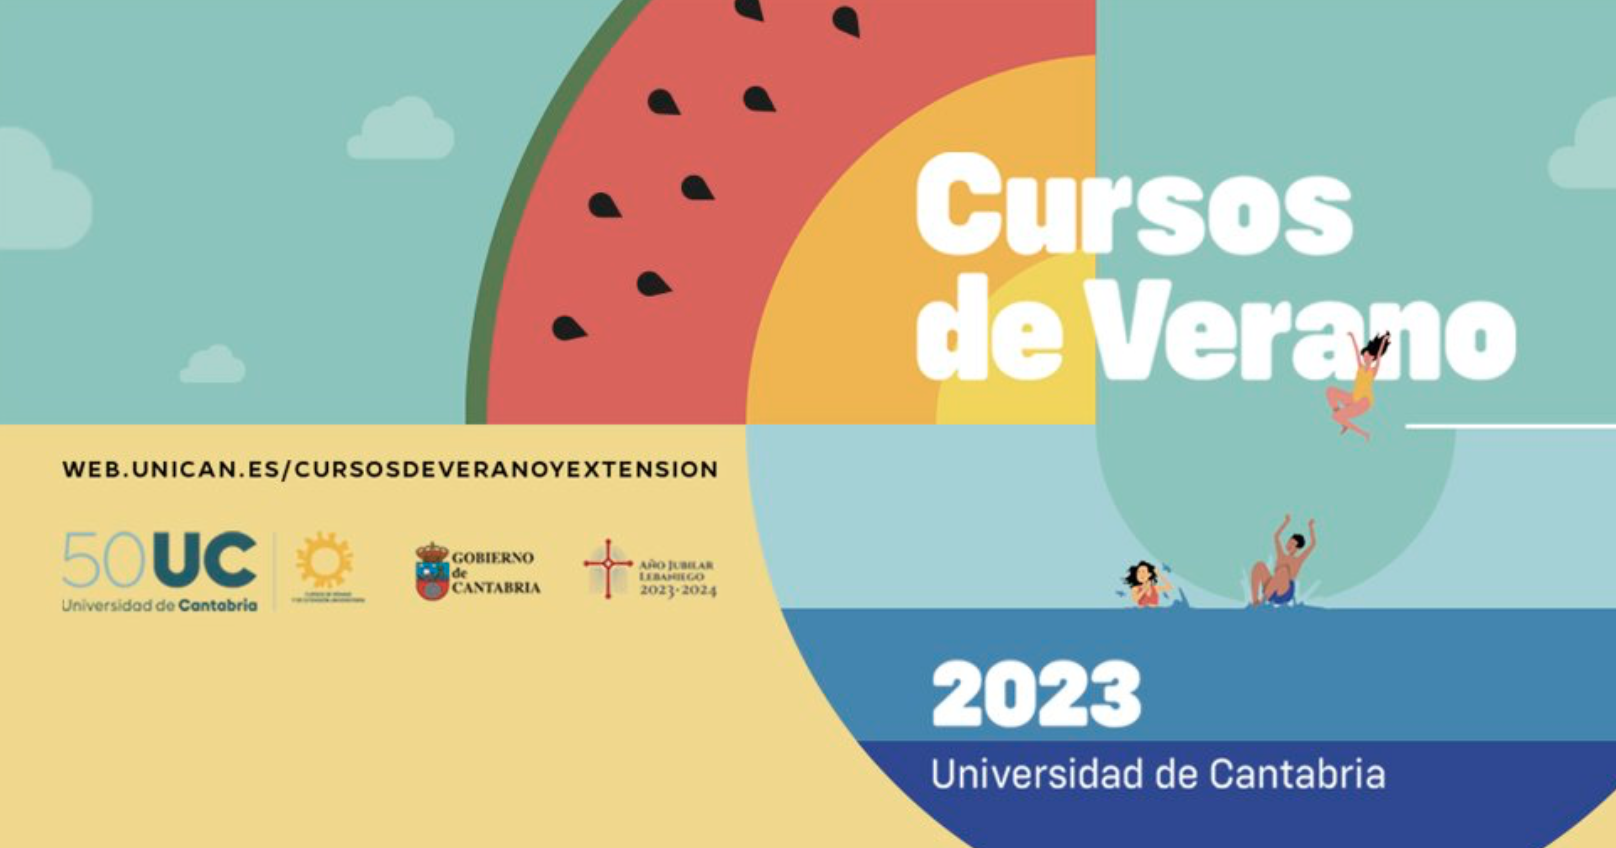 Universidad de Cantabria. Logo